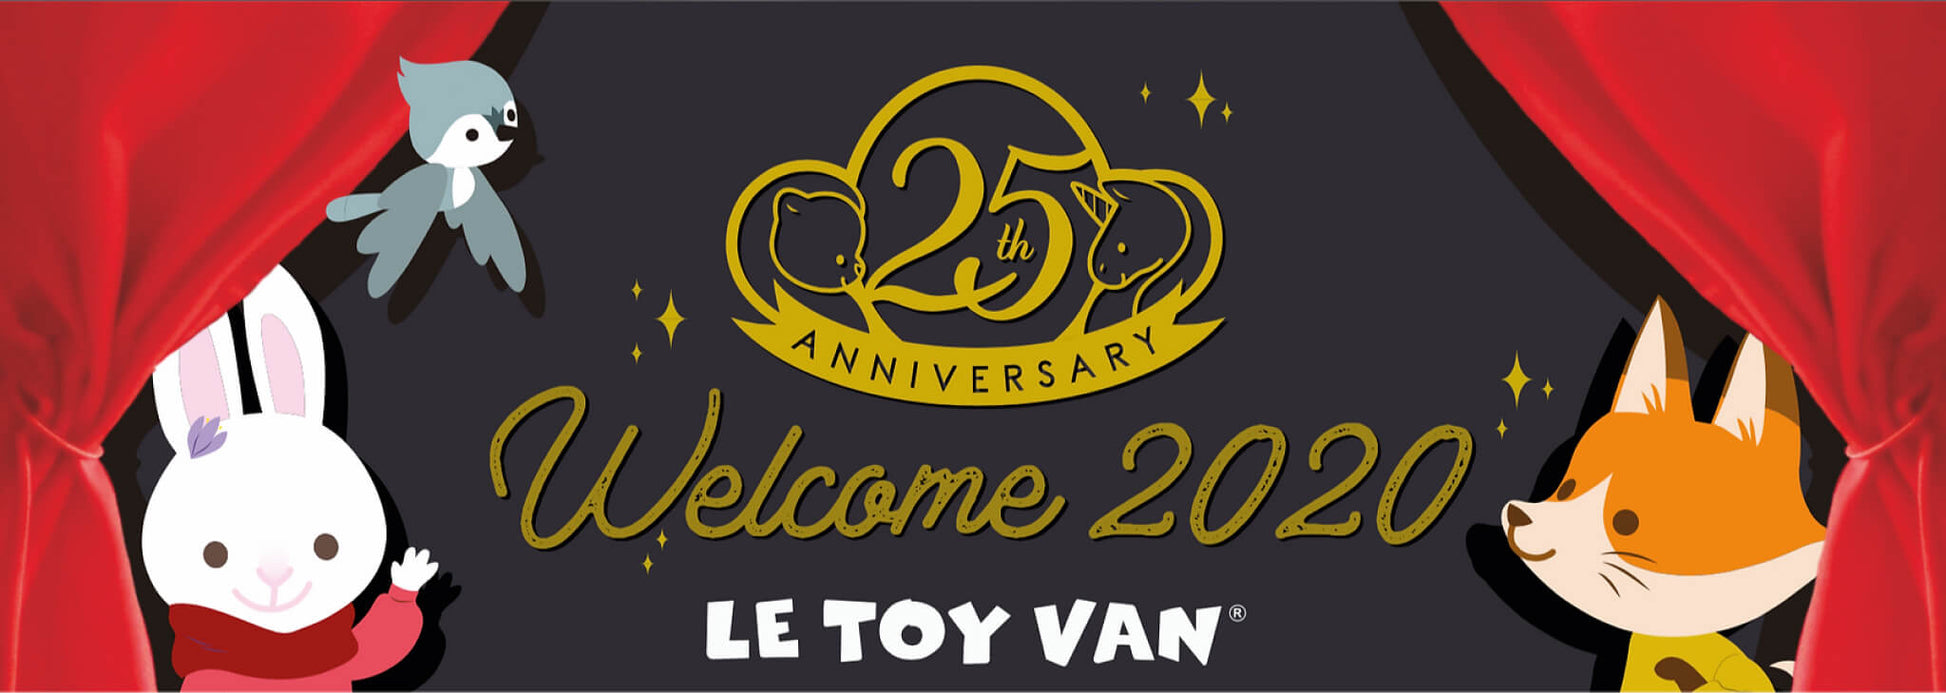 Studio Méïzou - Bannière Le Toy Van 3